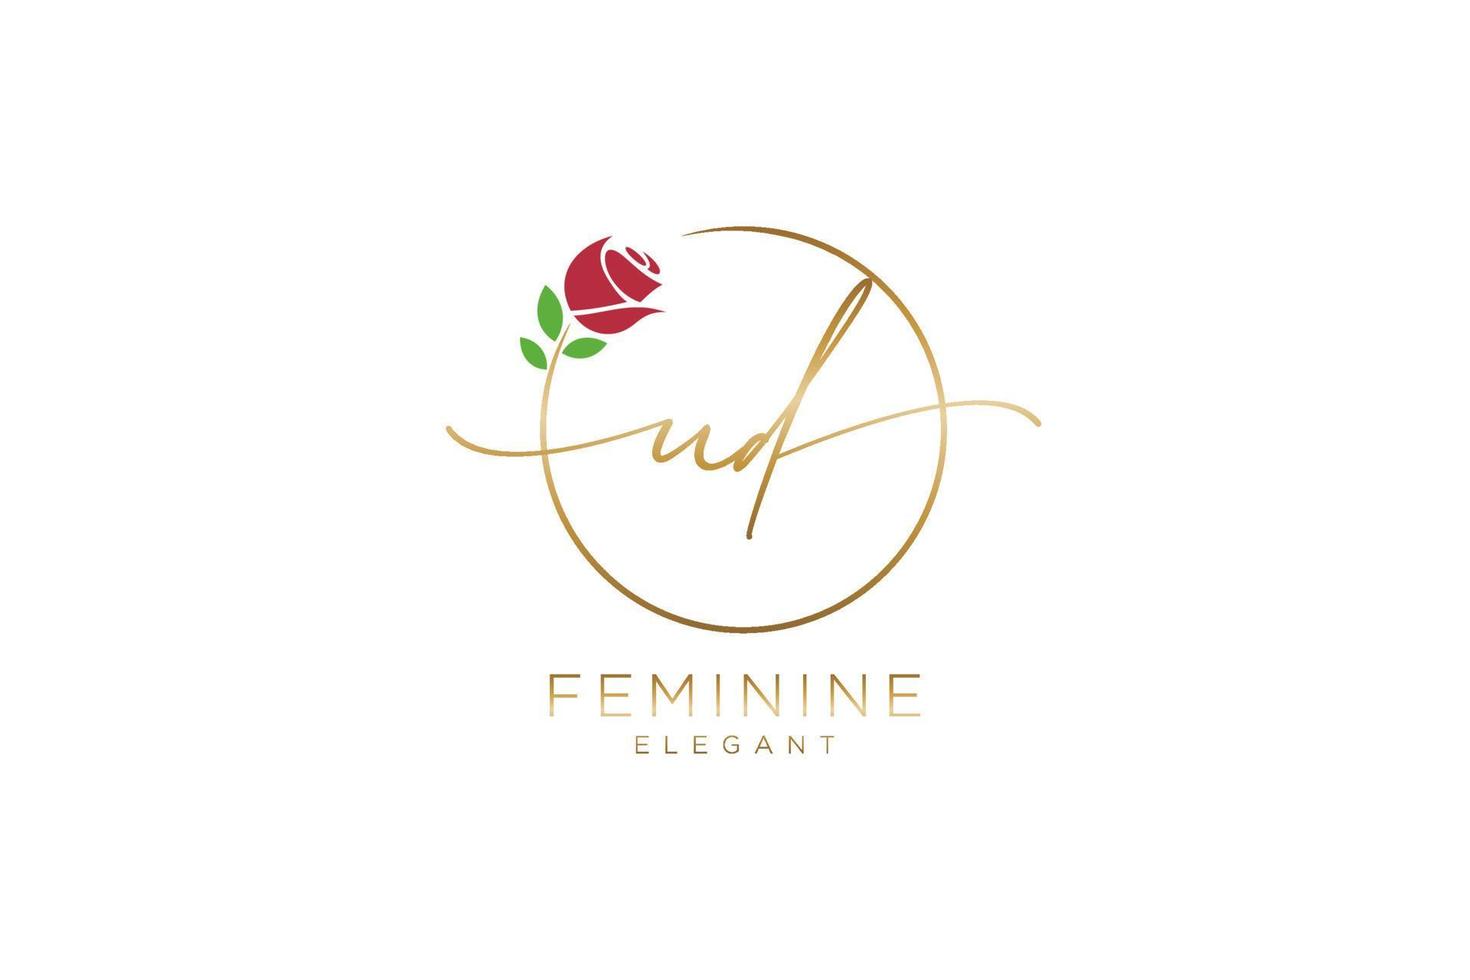 initial UD Feminine logo beauty monogram and elegant logo design, handwriting logo of initial signature, wedding, fashion, floral and botanical with creative template. vector